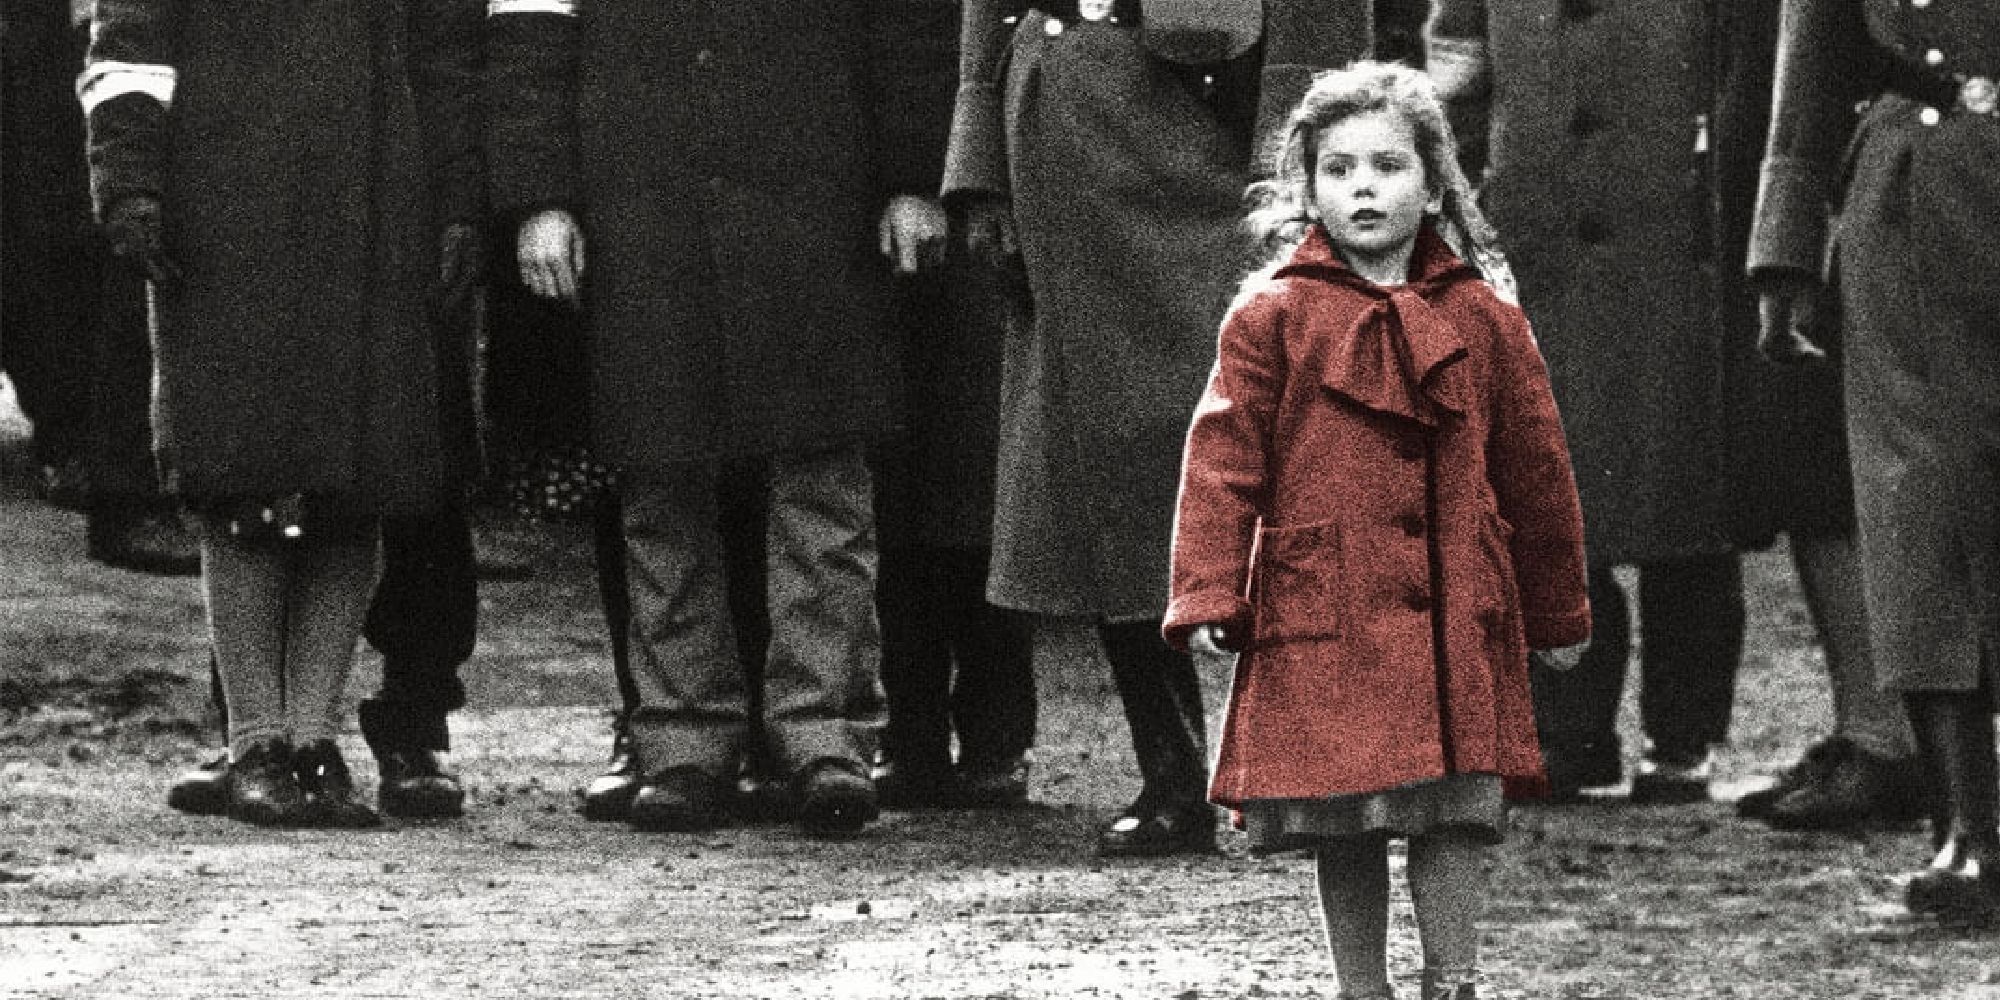 A little girl in a red coat walking alone in Schindler's List